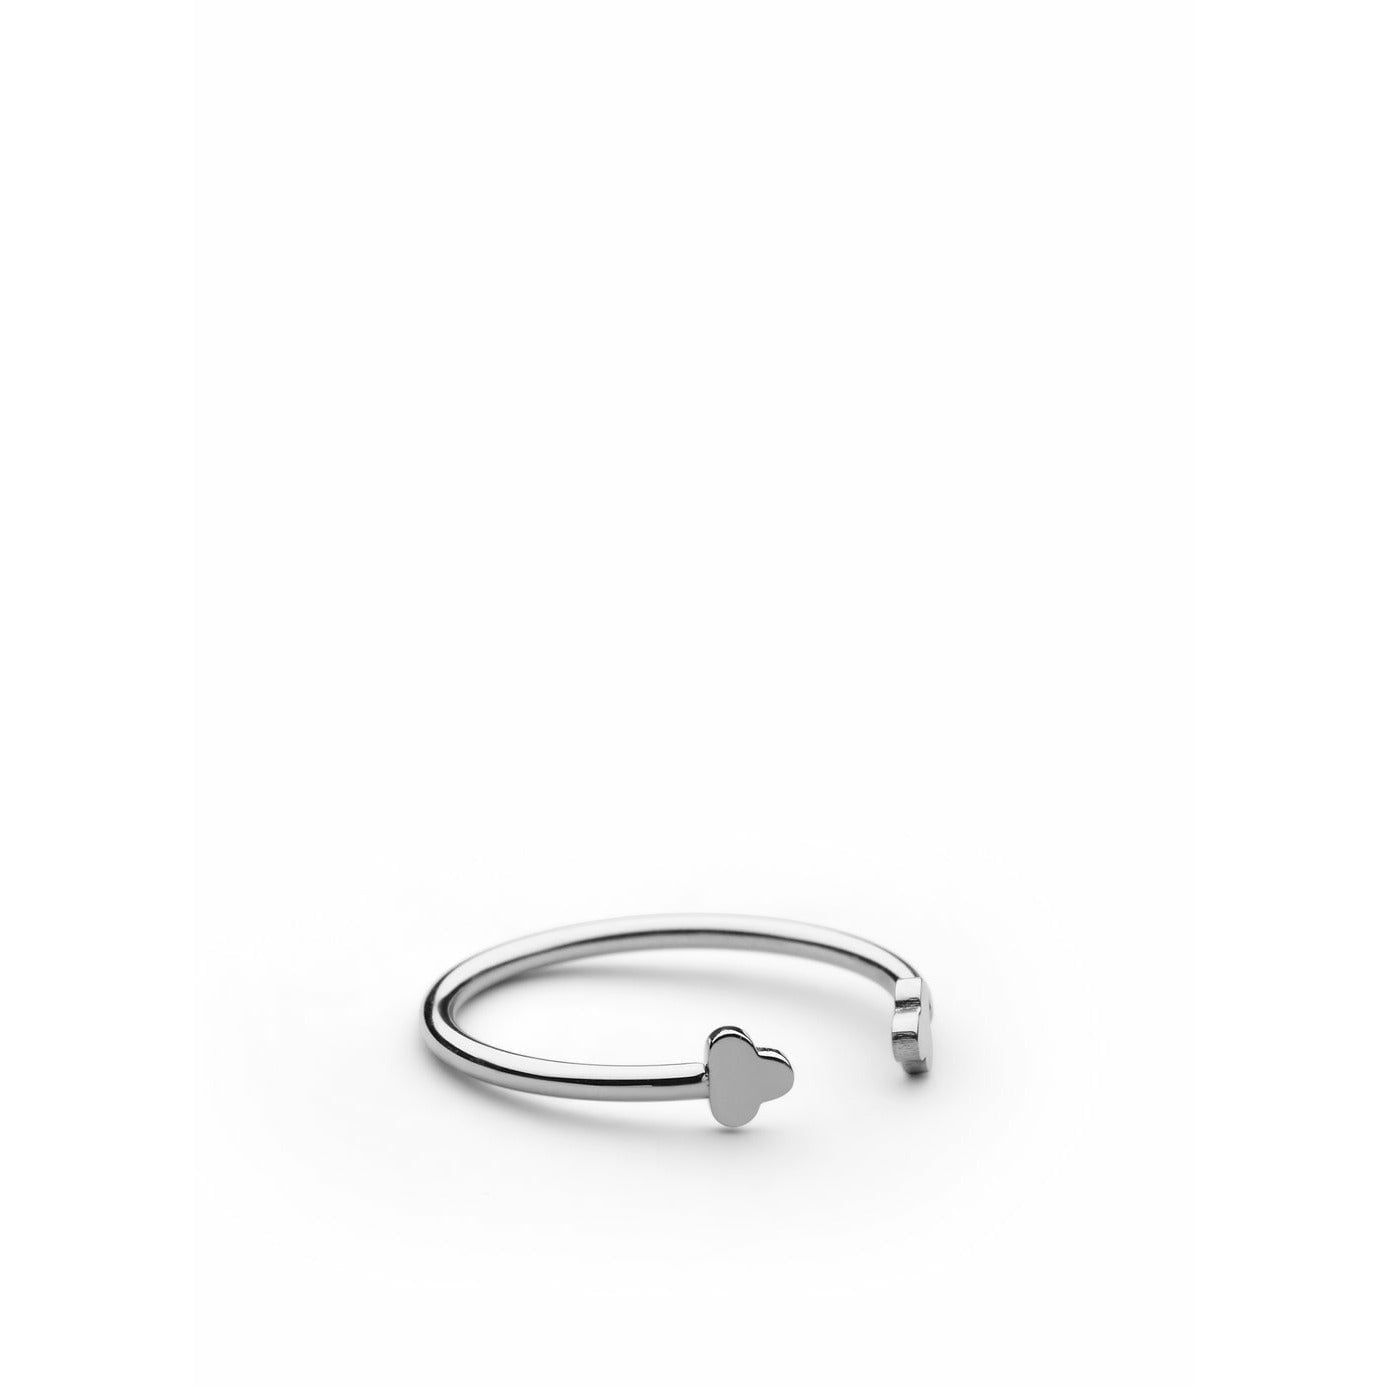 Skultuna Open Key Ring Steel pulido Pequeño, Ø1,6 cm